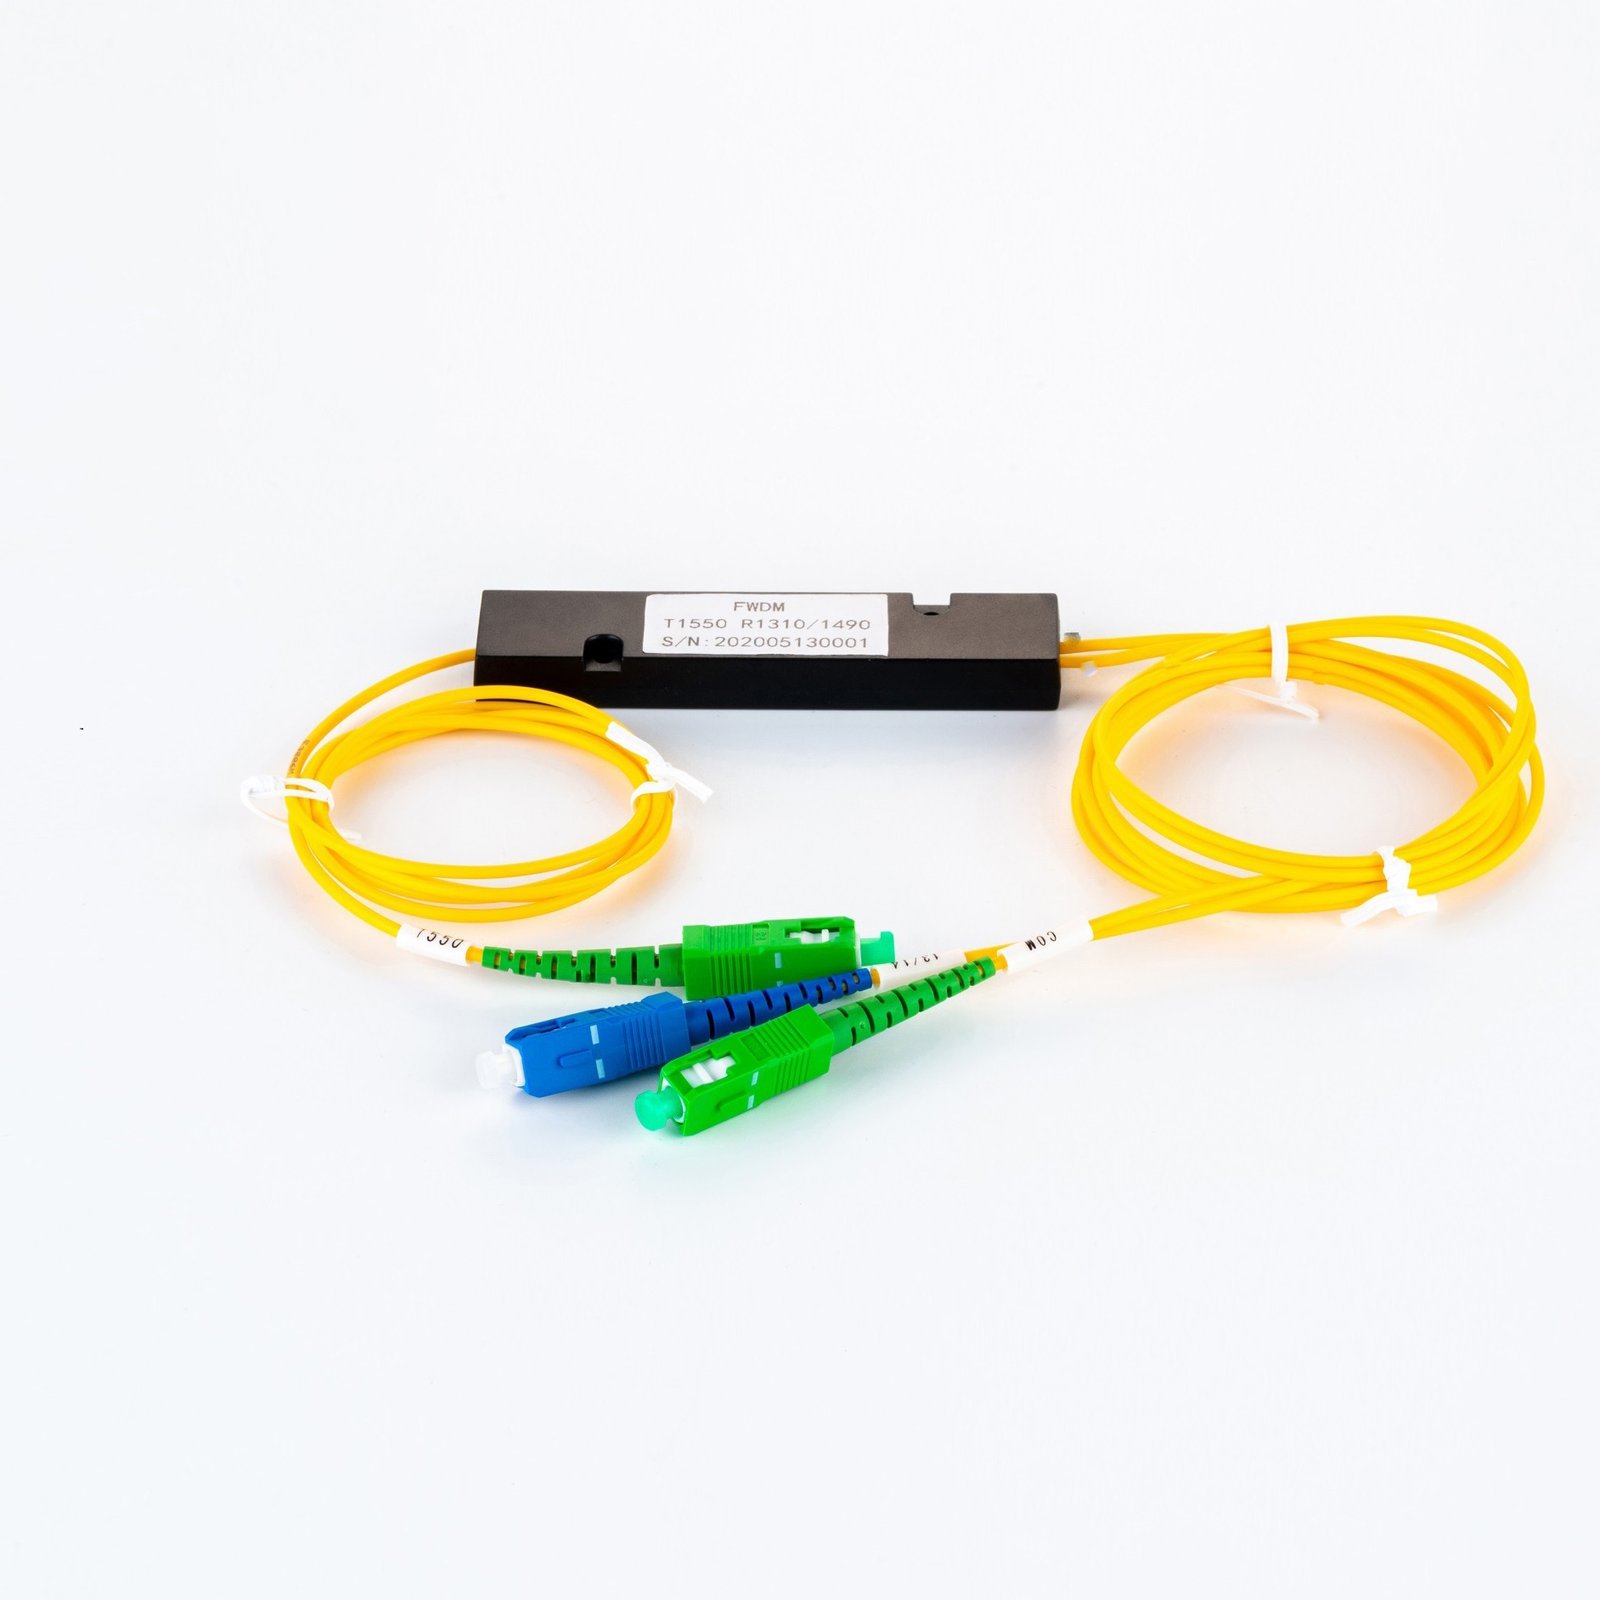 Personlized Products Sdh Pdh Dwdm - 3 ports fiber optic FTB coupler ABS box type optical fiber FWDM – Qualfiber